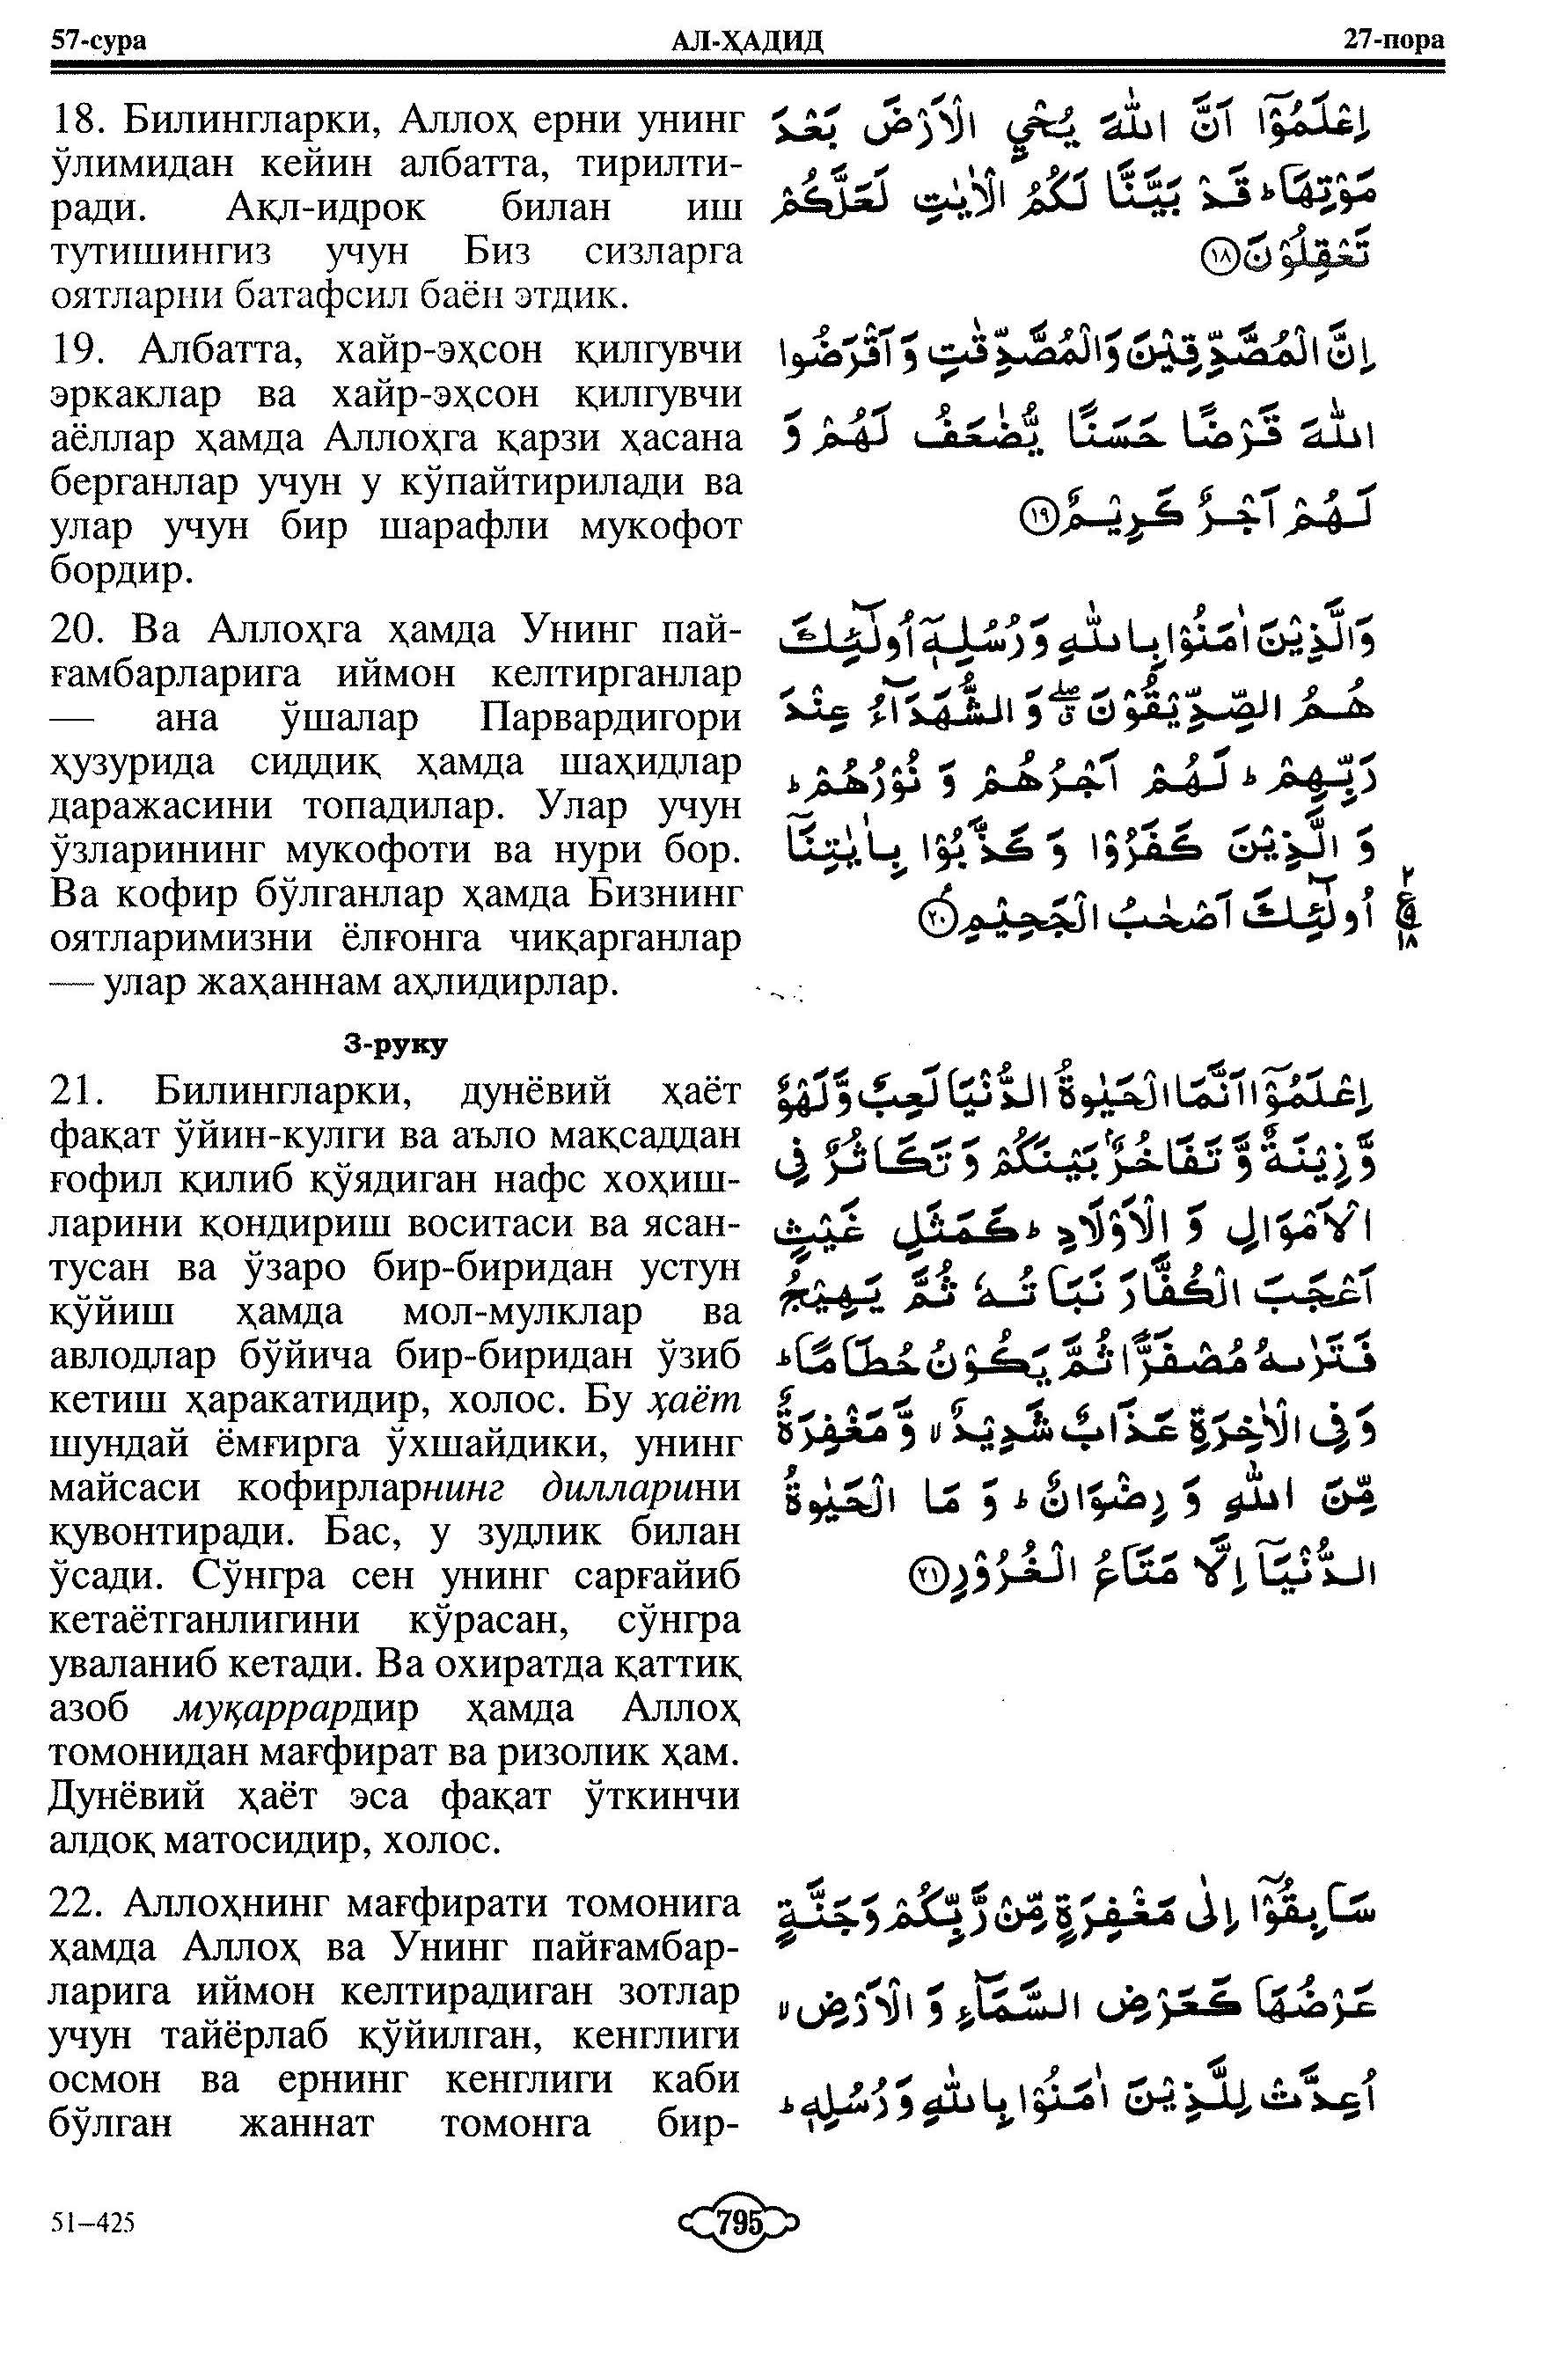 057-al-hadid_Page_5